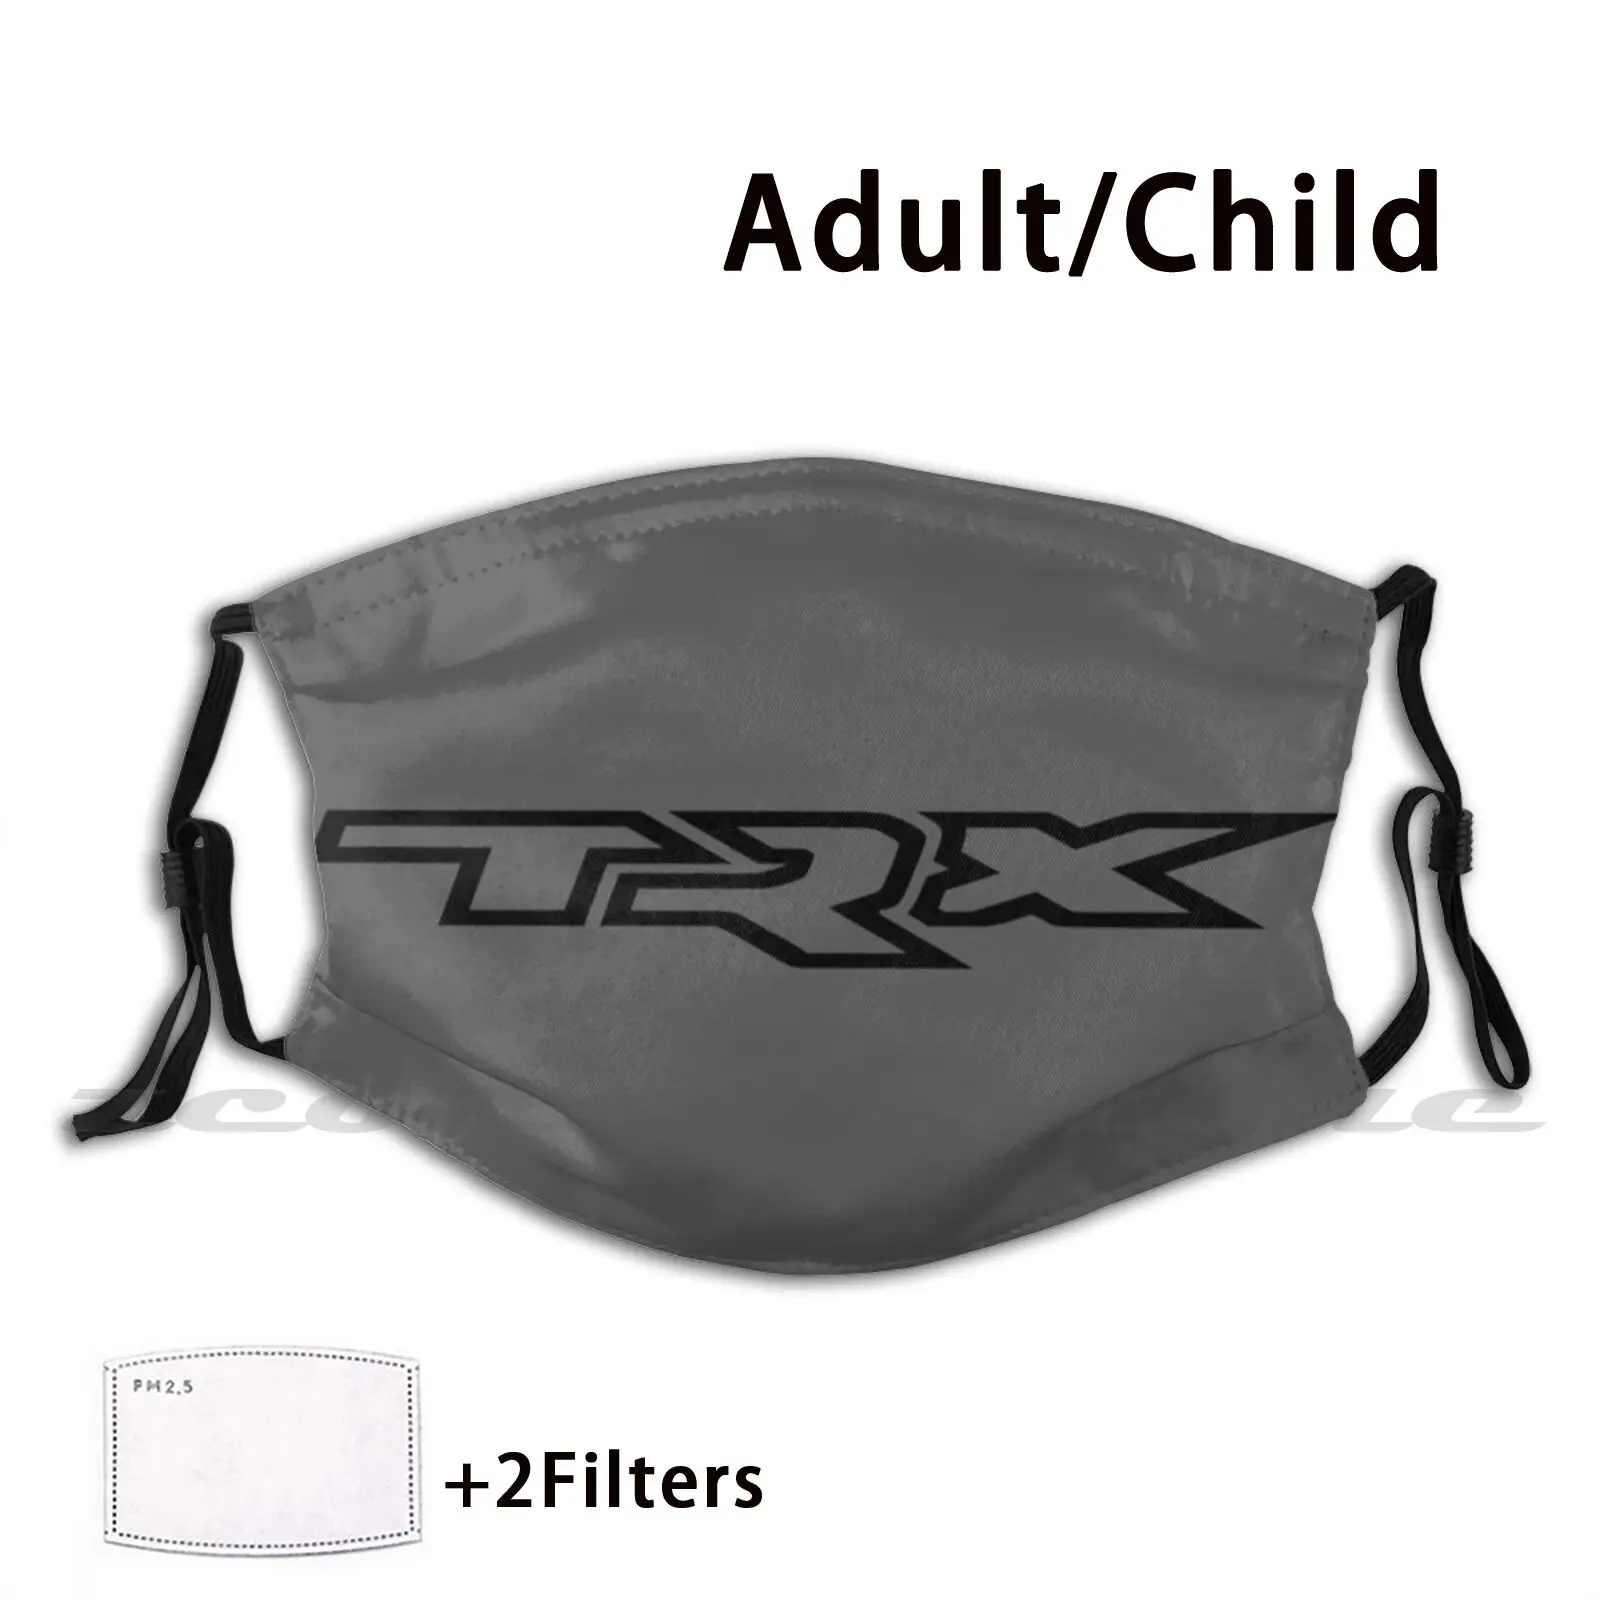 

Mask Adult Child Washable Pm2.5 Filter Logo Creativity Demon Challenger Hellcat Mopar Mopar Or No Car Super Car Muscle Car